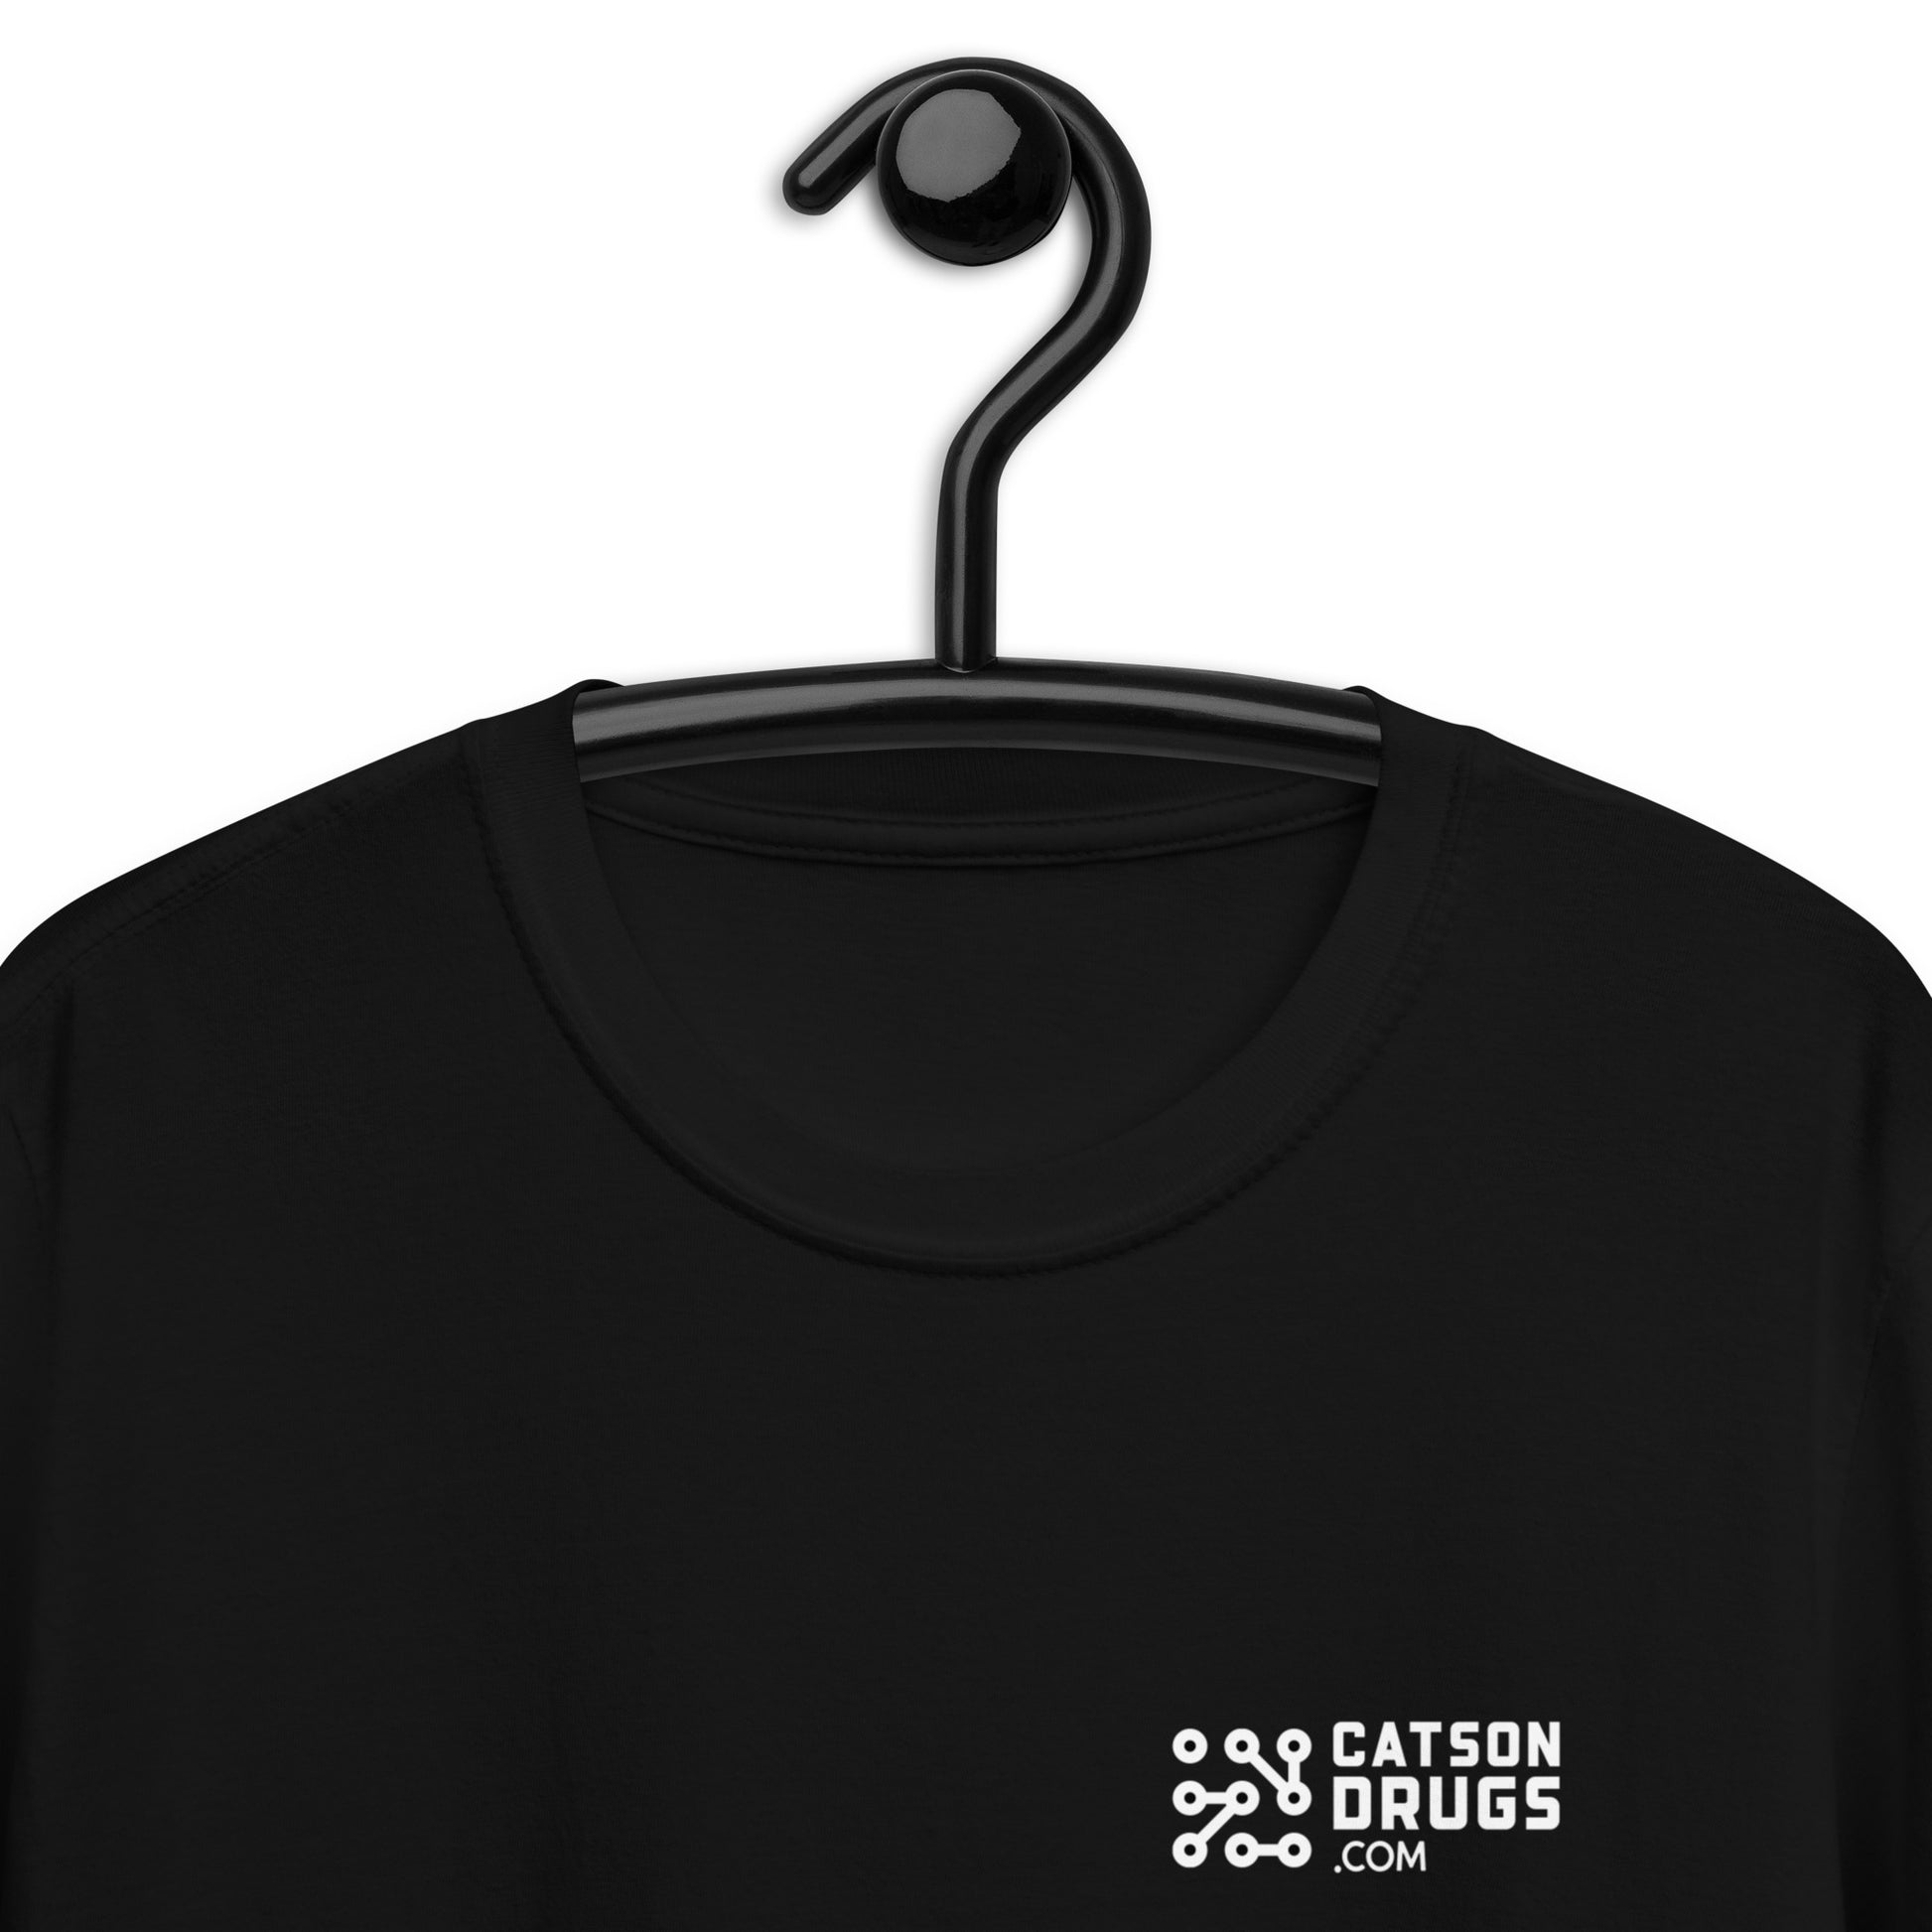 5-MeO-DMT Vibes - Unisex T-Shirt - CatsOnDrugs